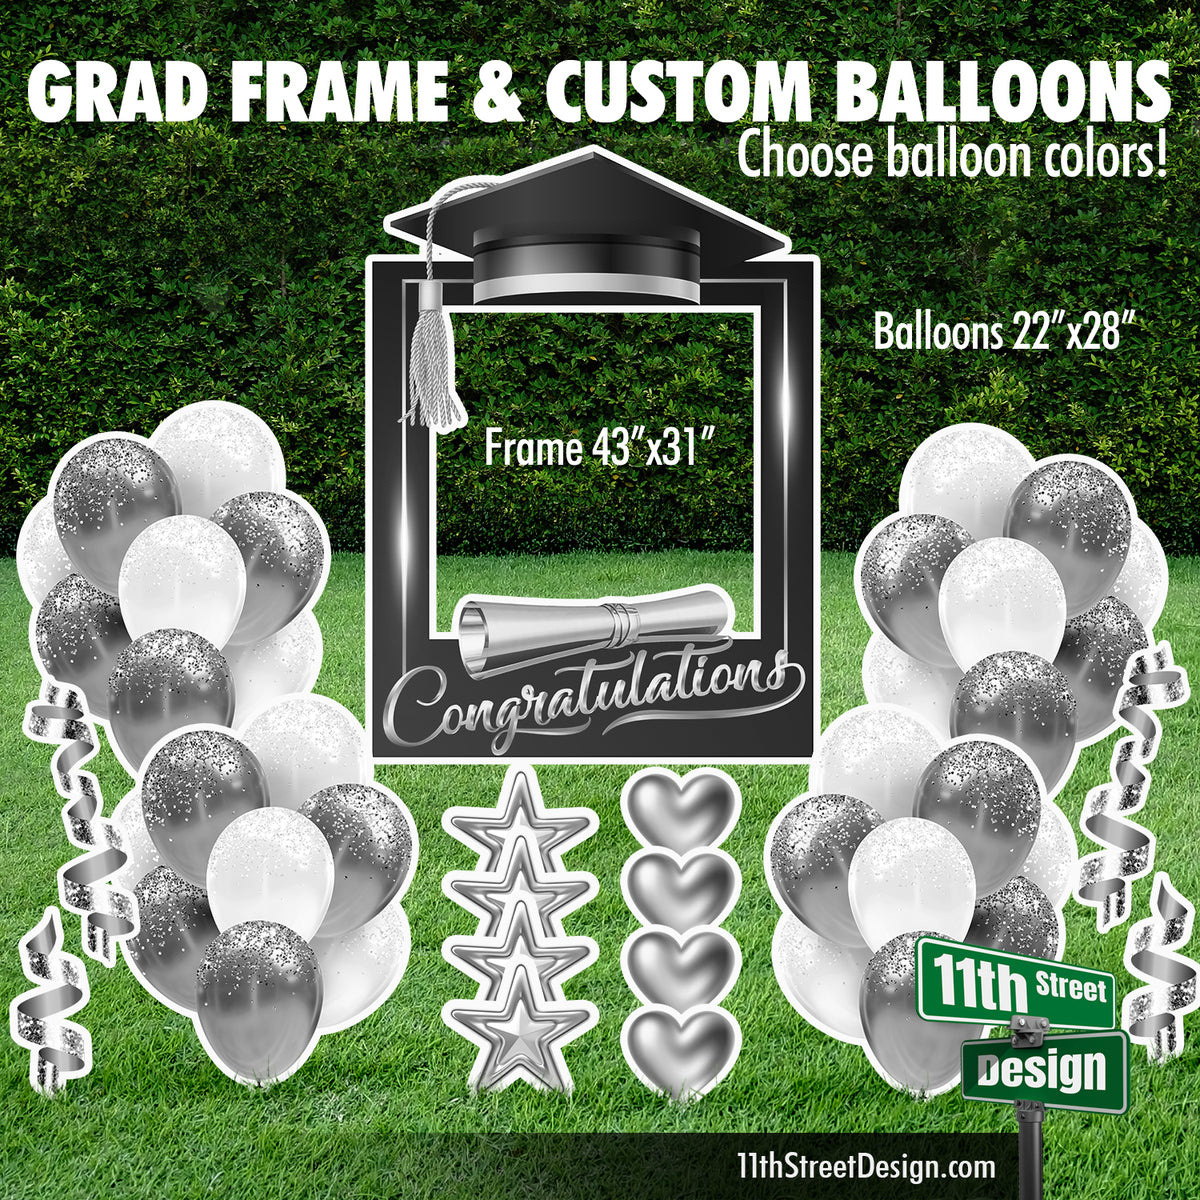 Grad Frame With Custom Balloons - Yard Card Setup Fillers